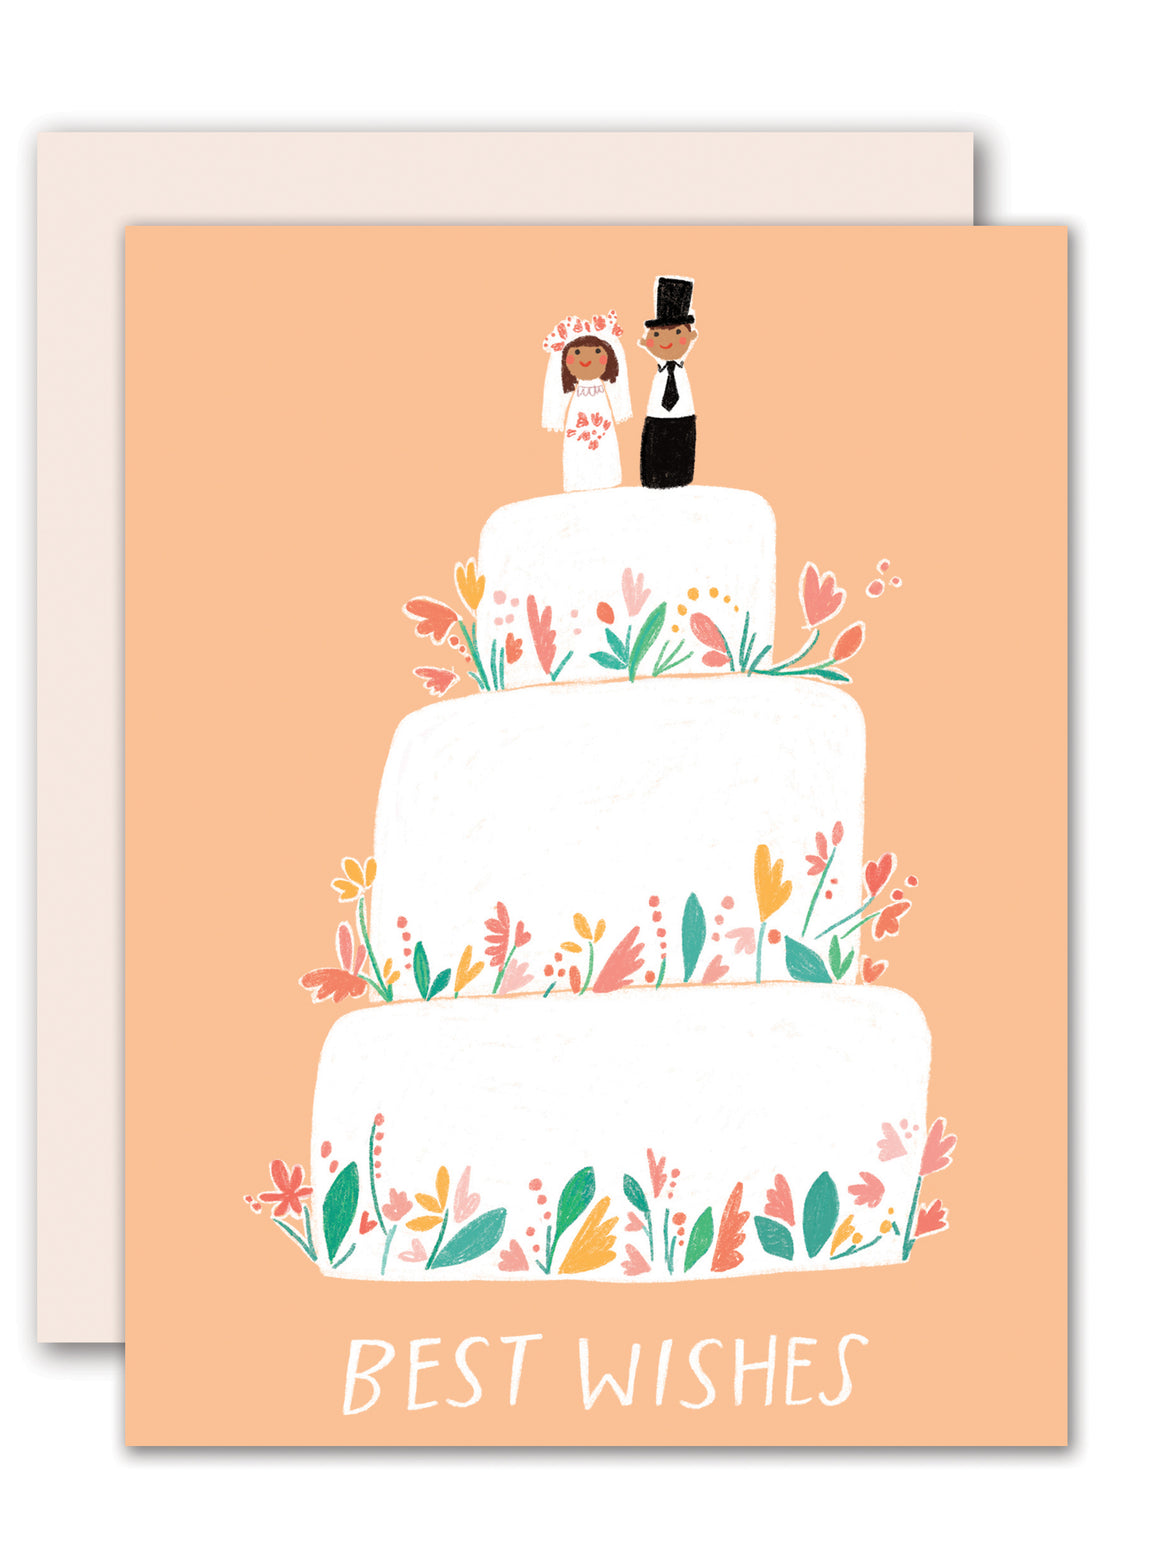 Wedding cake - wedding congratulations